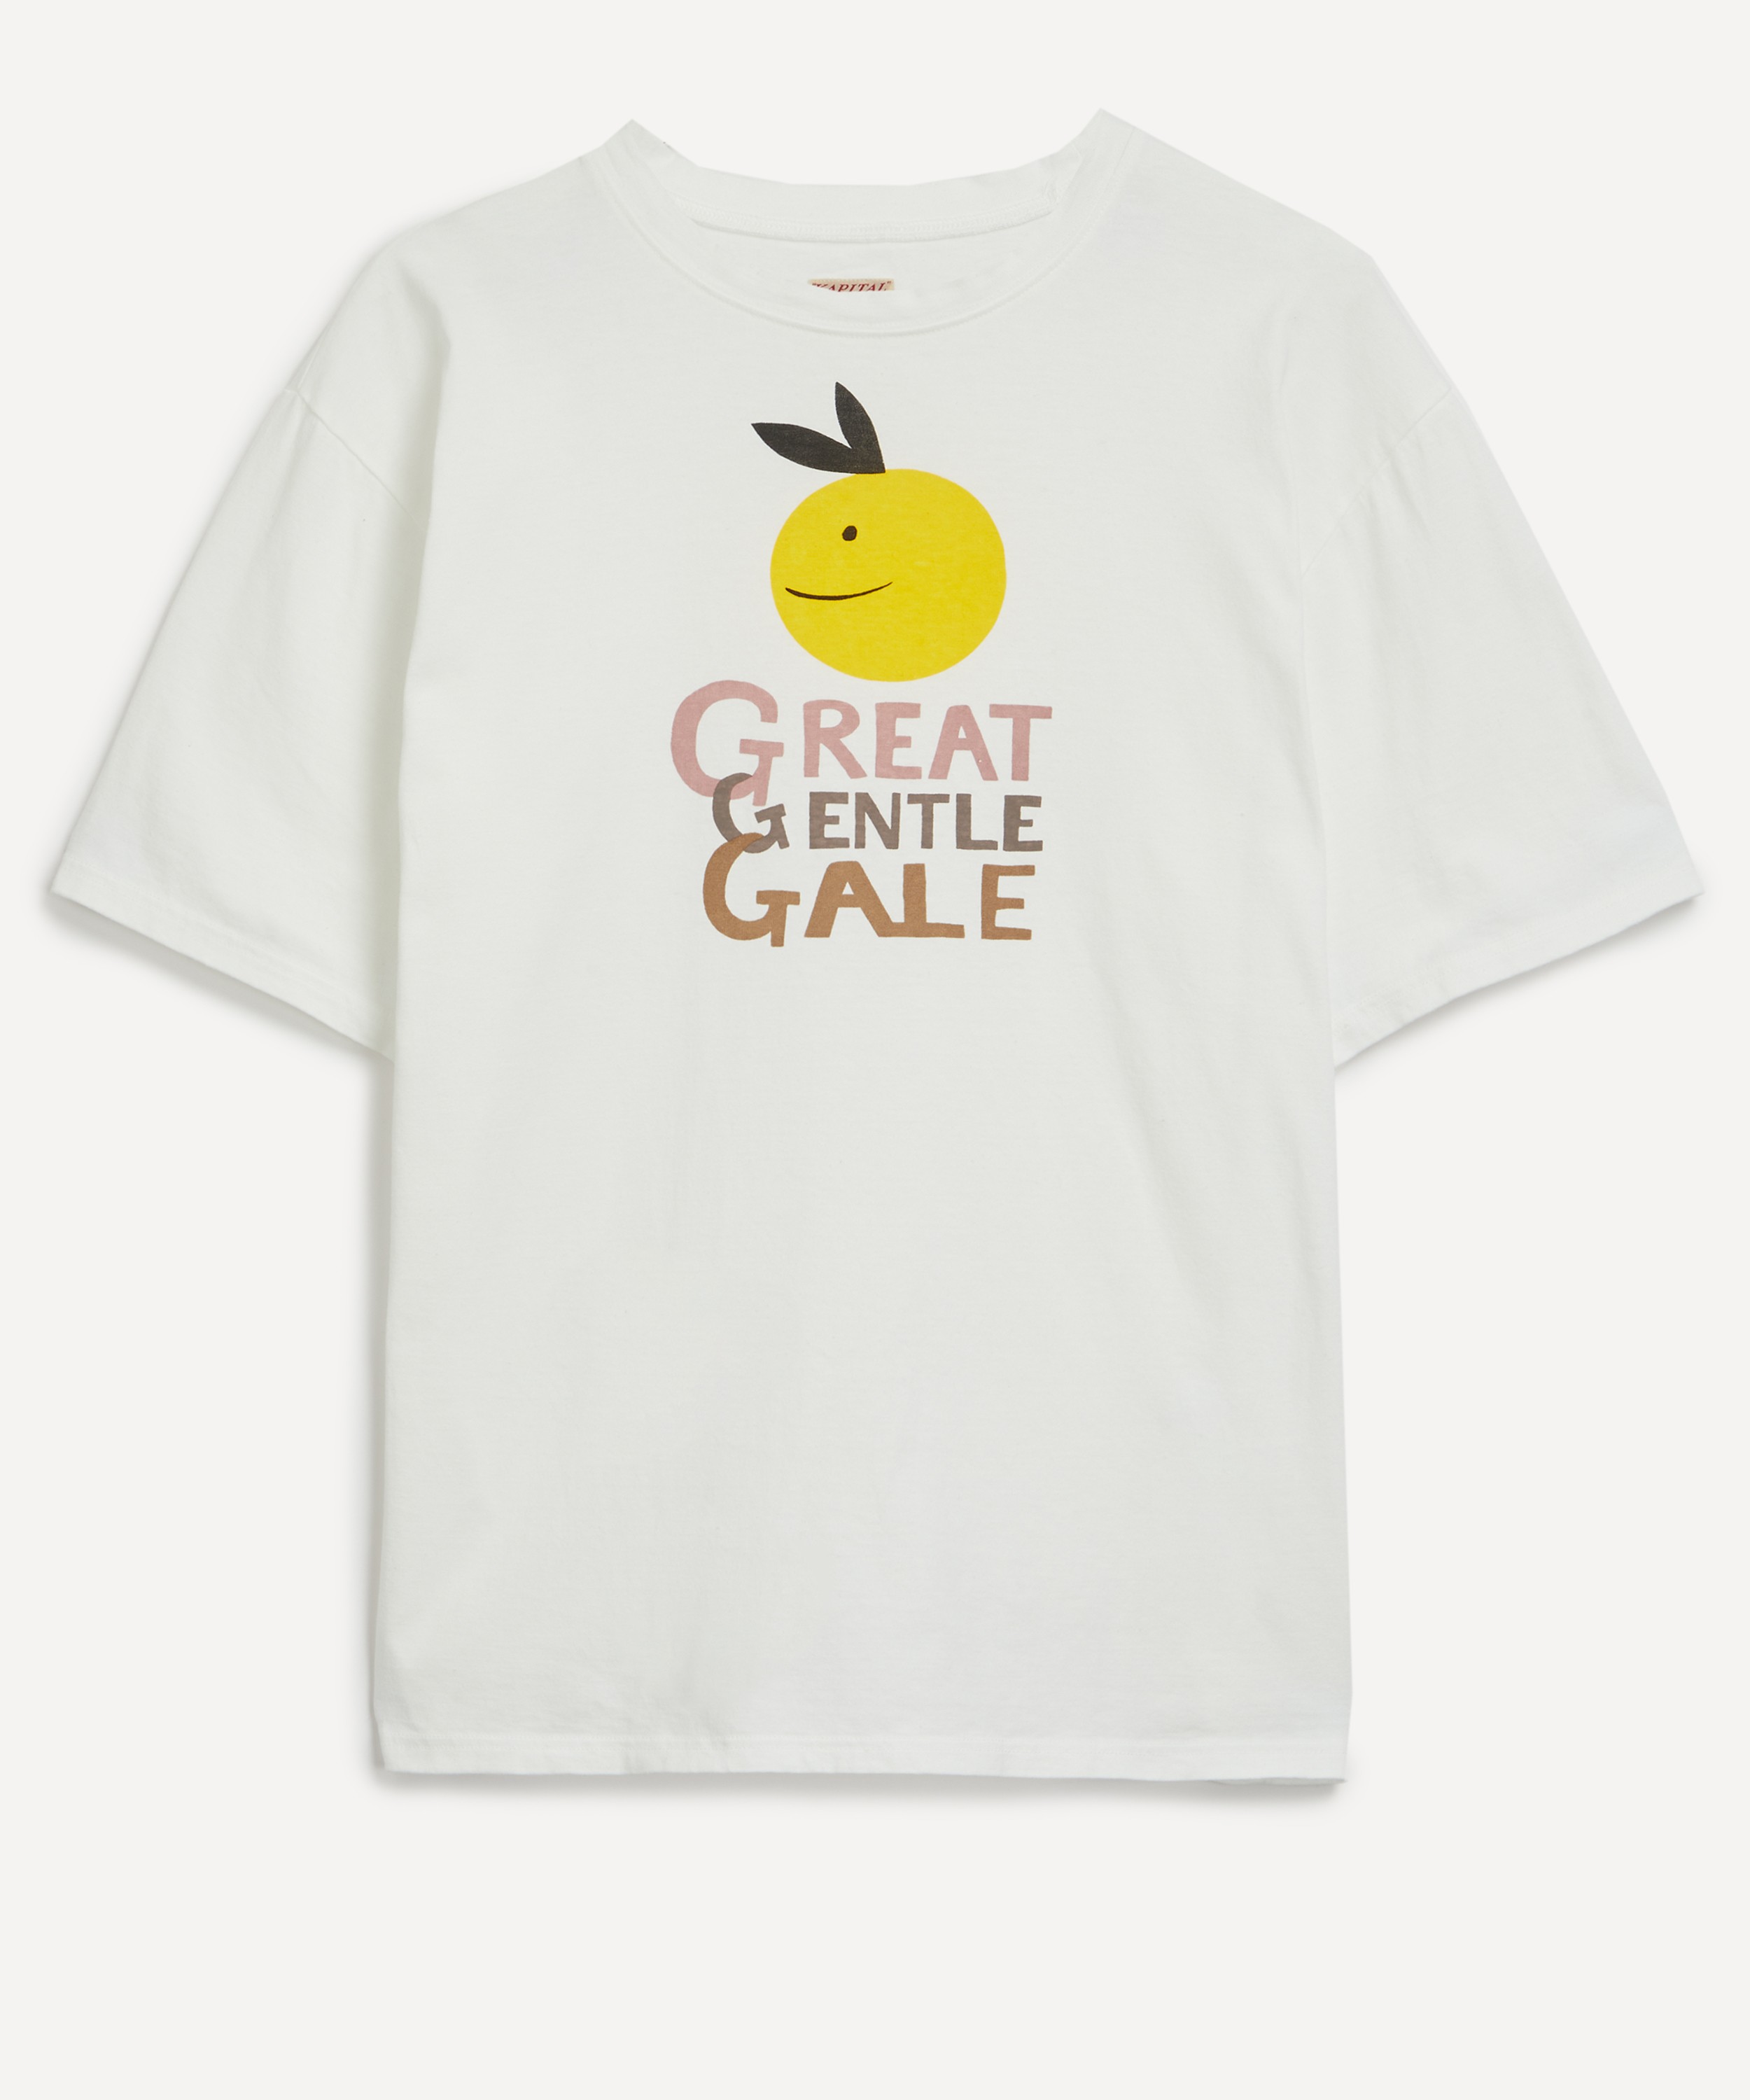 Kapital - Great Gentle Gale Jersey T-Shirt